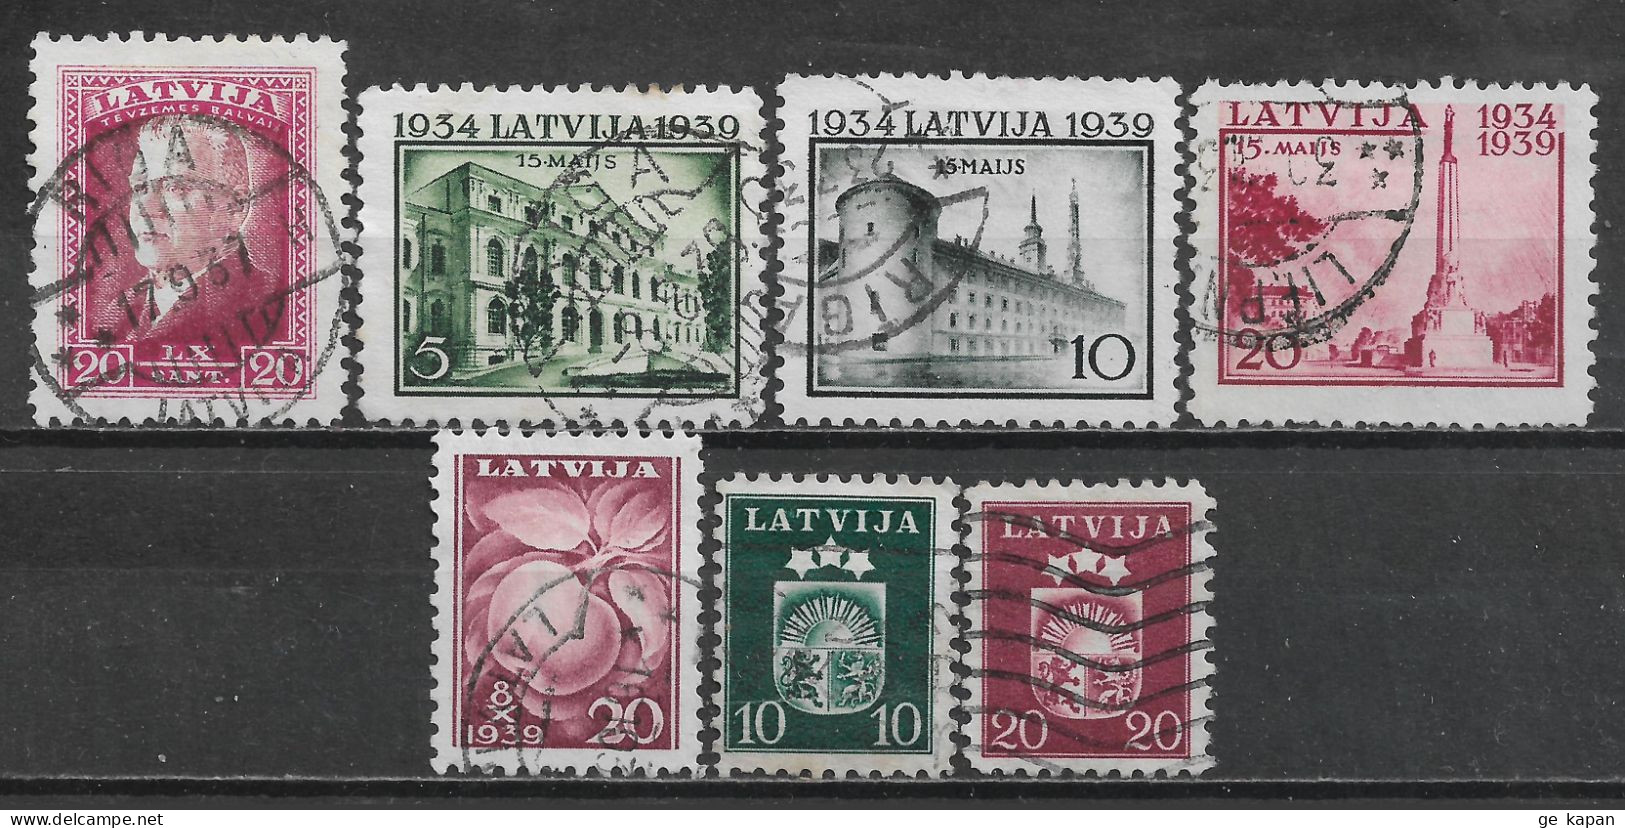 1937-1940 LATVIA Set Of 7 Used Stamps (Michel # 256,272-274,280,286,287) CV €6.20 - Lettland